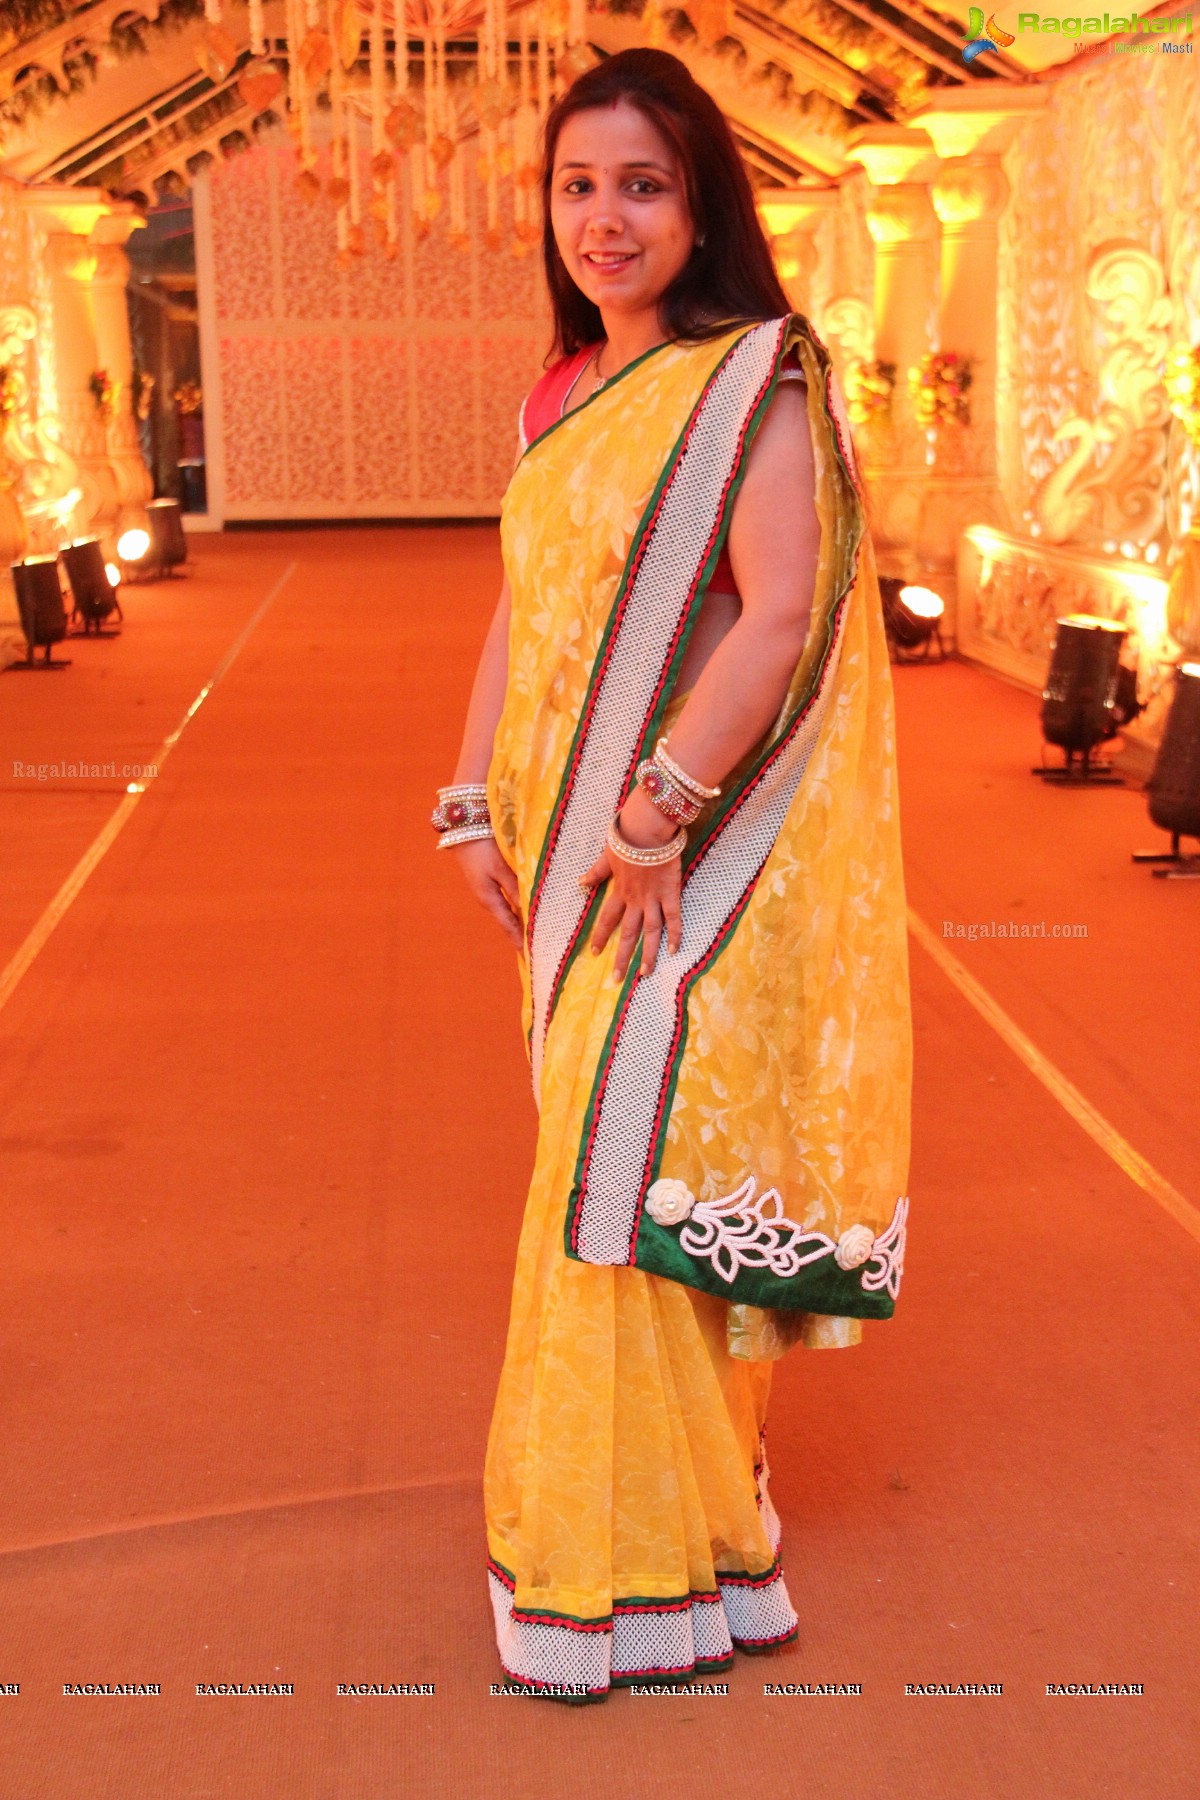 Anata-Rama Wedding Reception at N Convention, Hyderabad